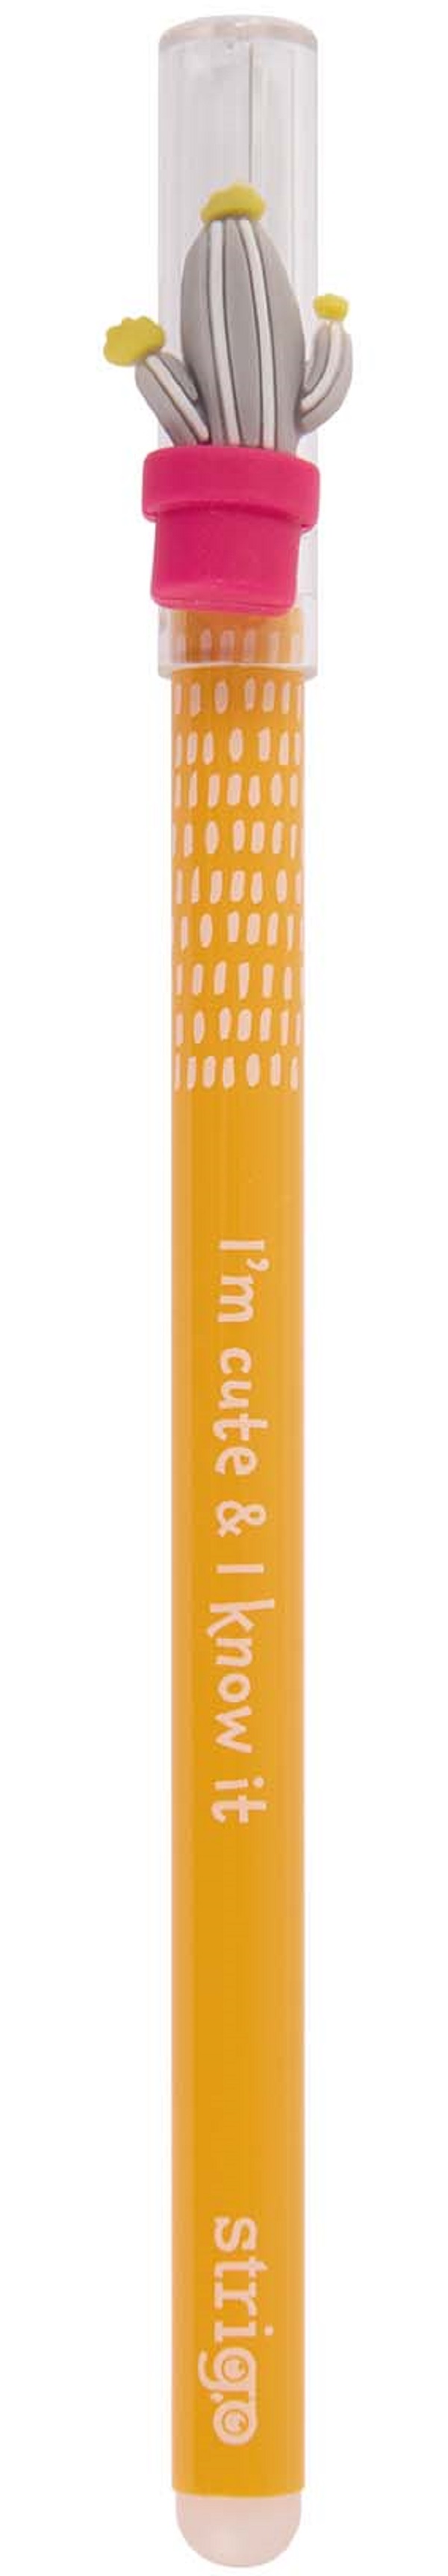 Pix cerneala termosensibila: Cactus portocaliu